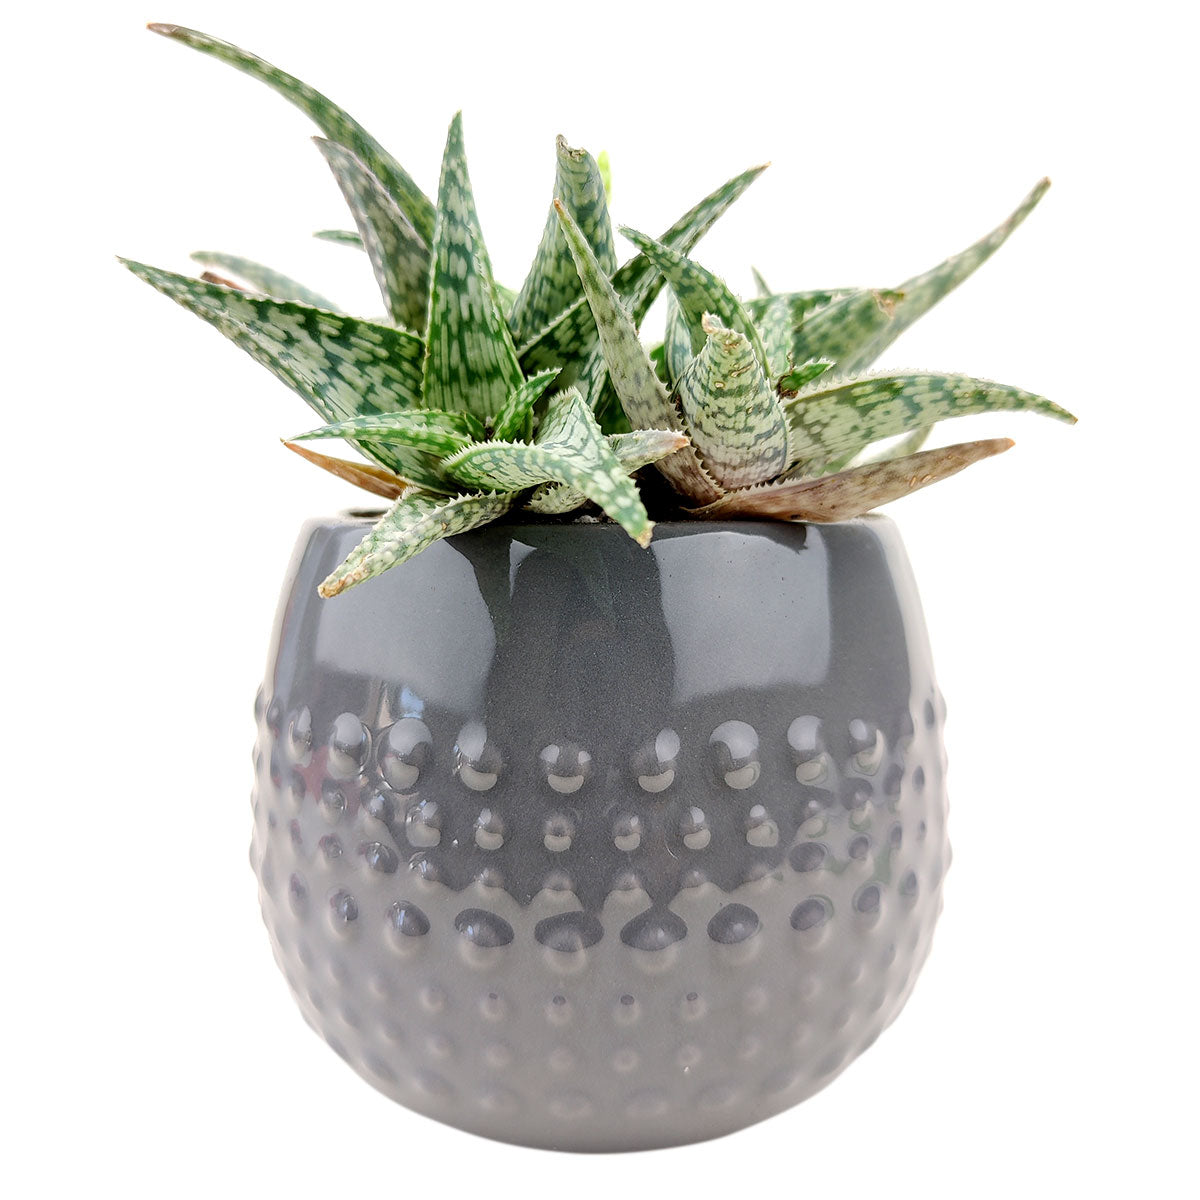 Gray Dot Pot for sale, Ceramic Pot for succulents and flowers, Modern style flower pot for sale, Succulent gift decor ideas